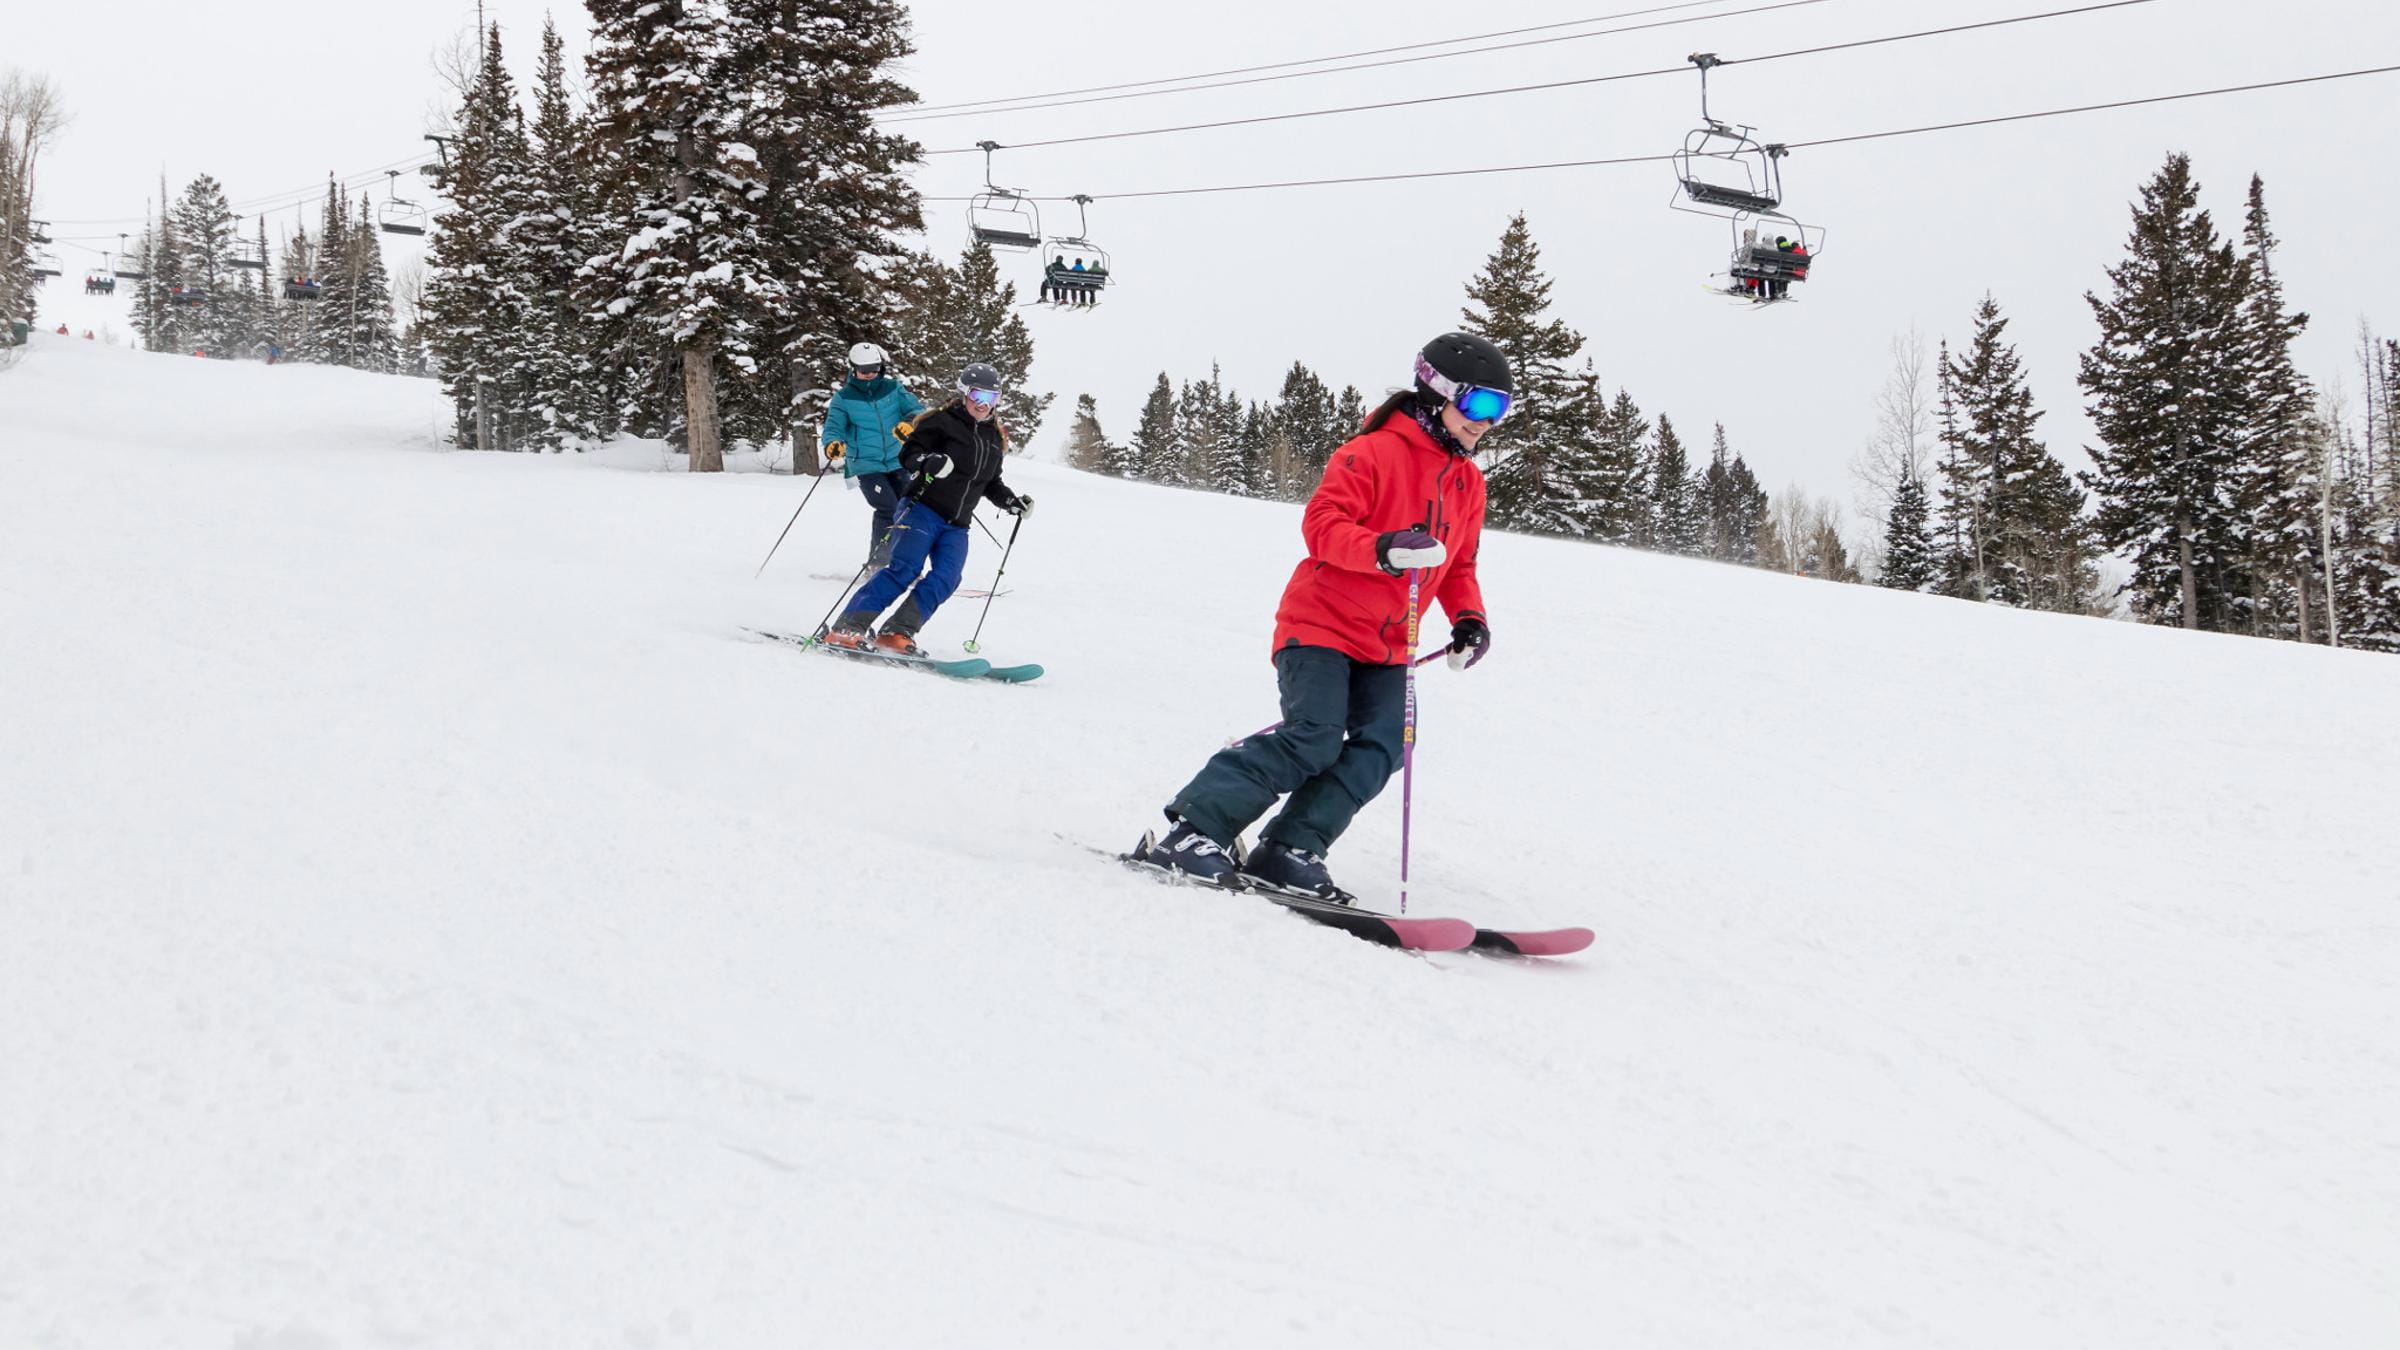 Sport ski rentals at Deer Valley Resort